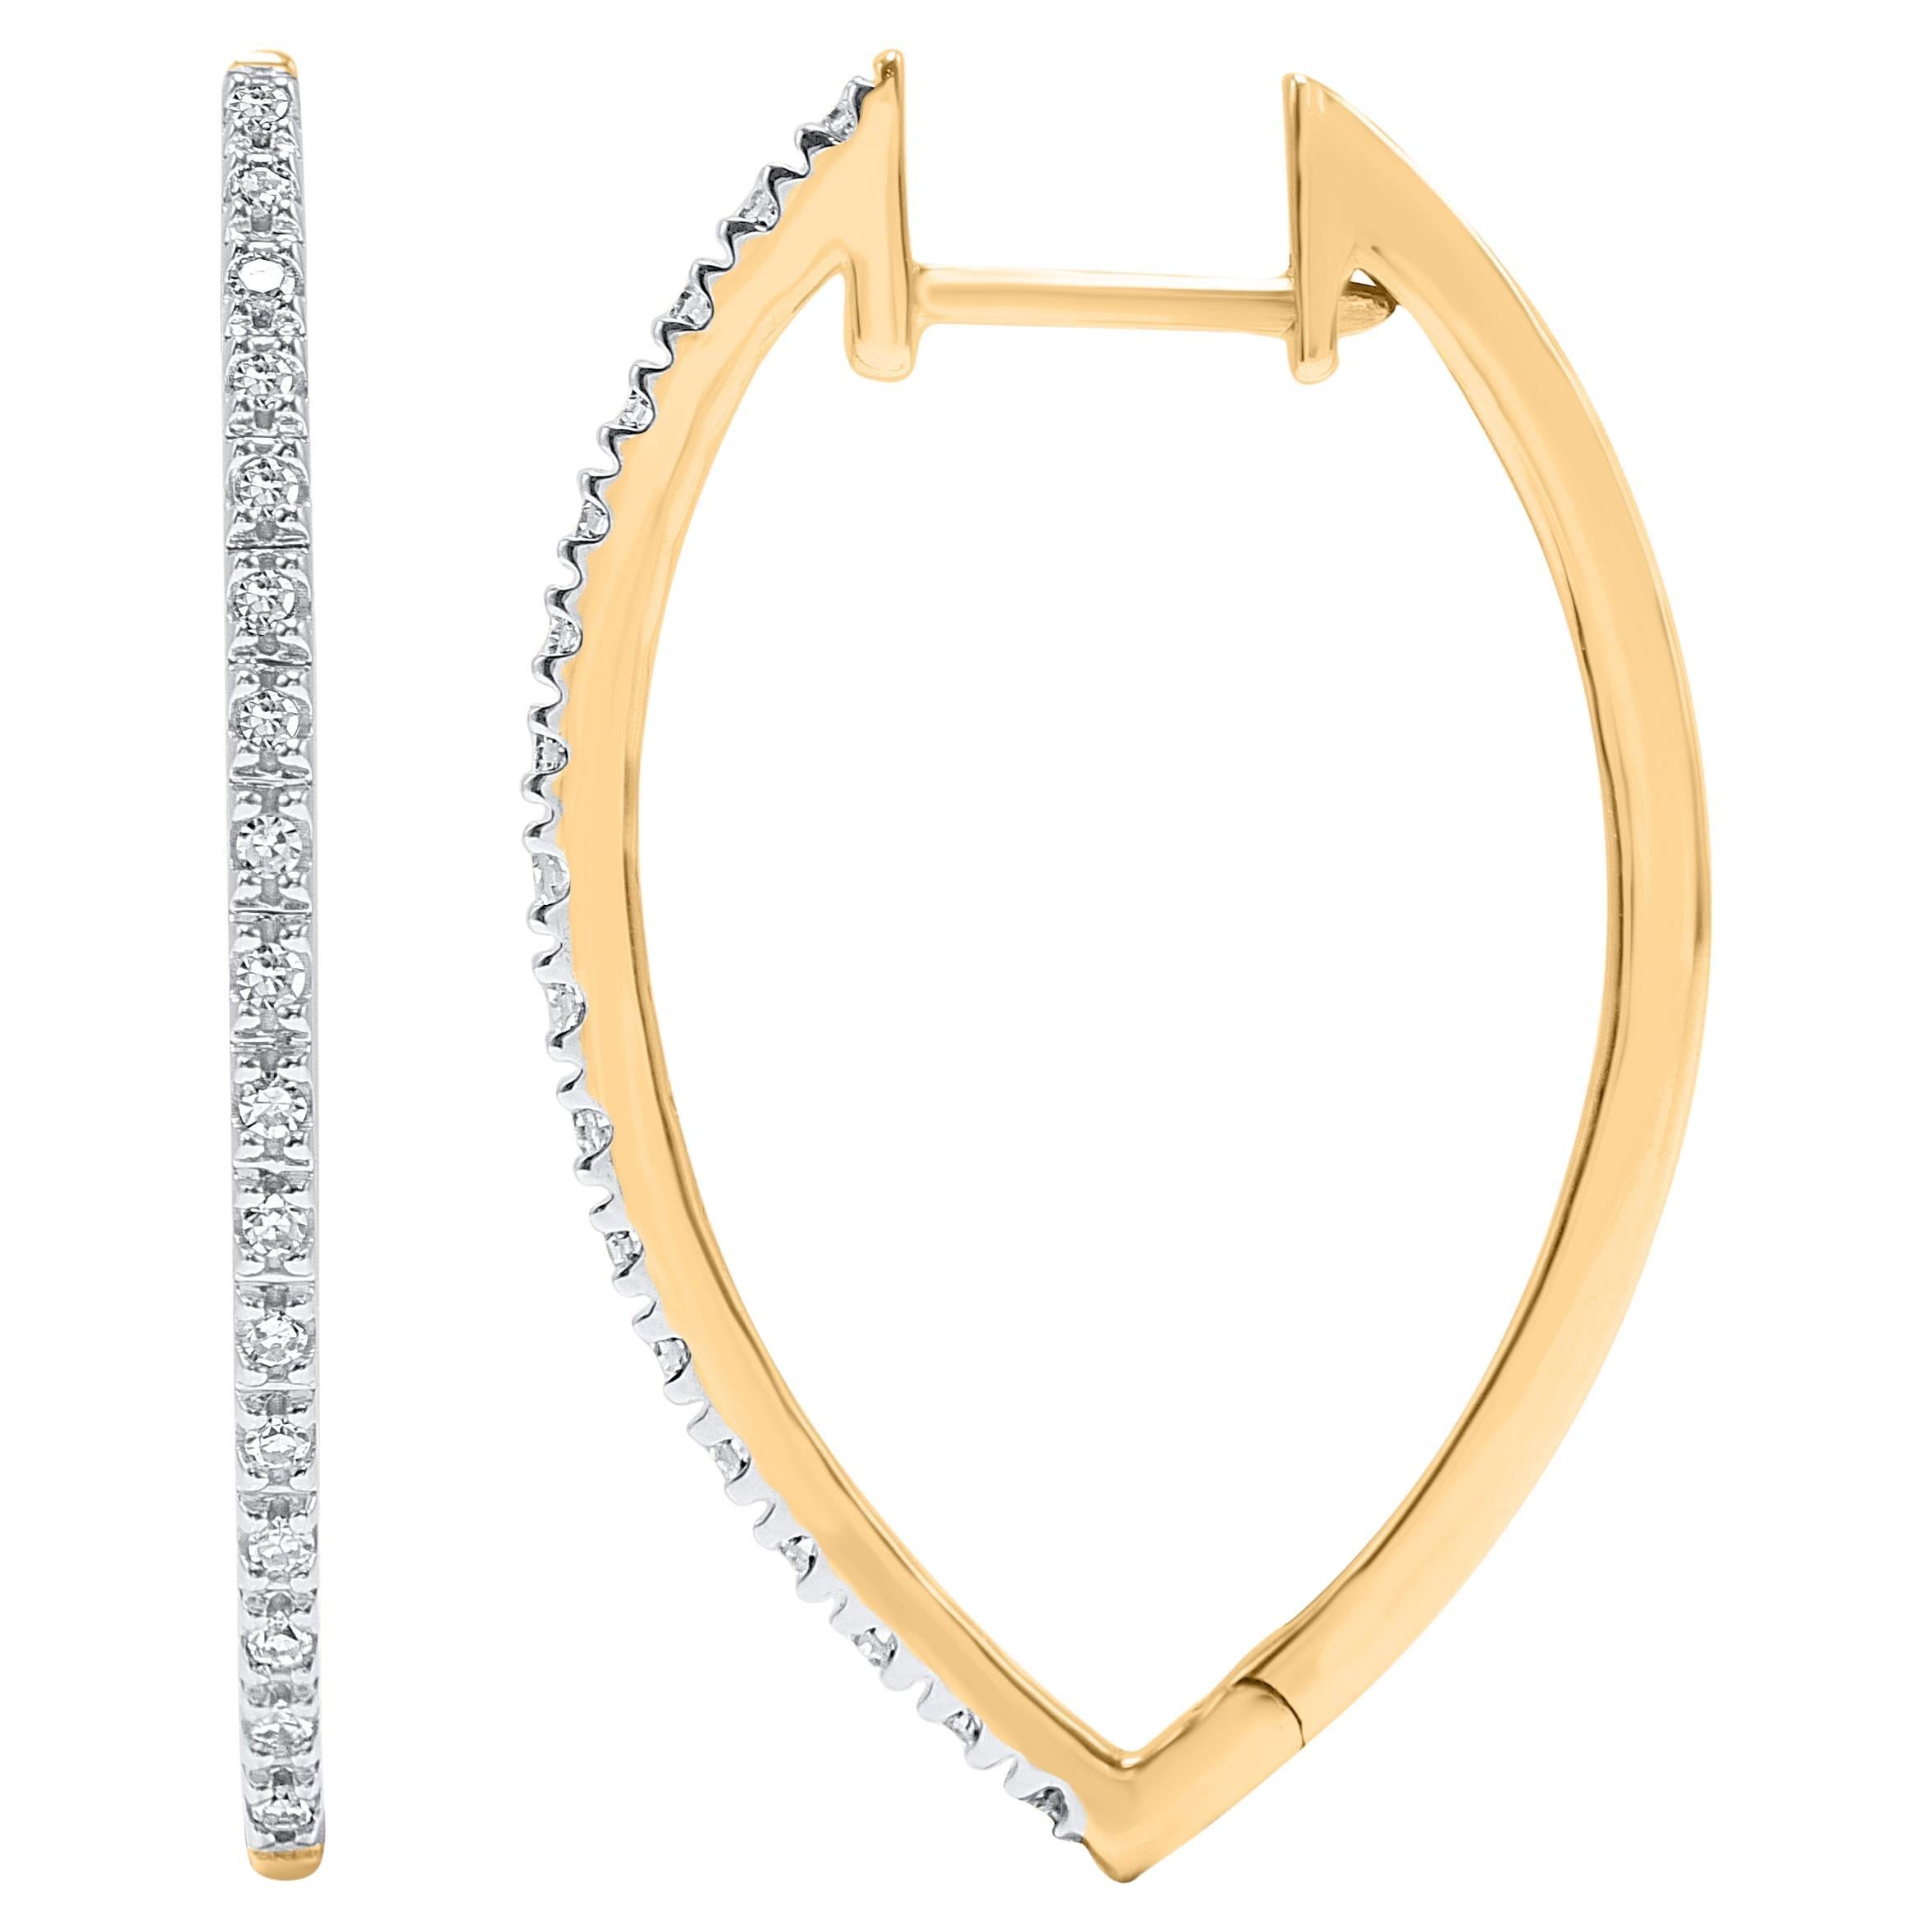 TJD 0.15 Carat Natural Round Cut Diamond 14 Karat Yellow Gold Hoop Earrings